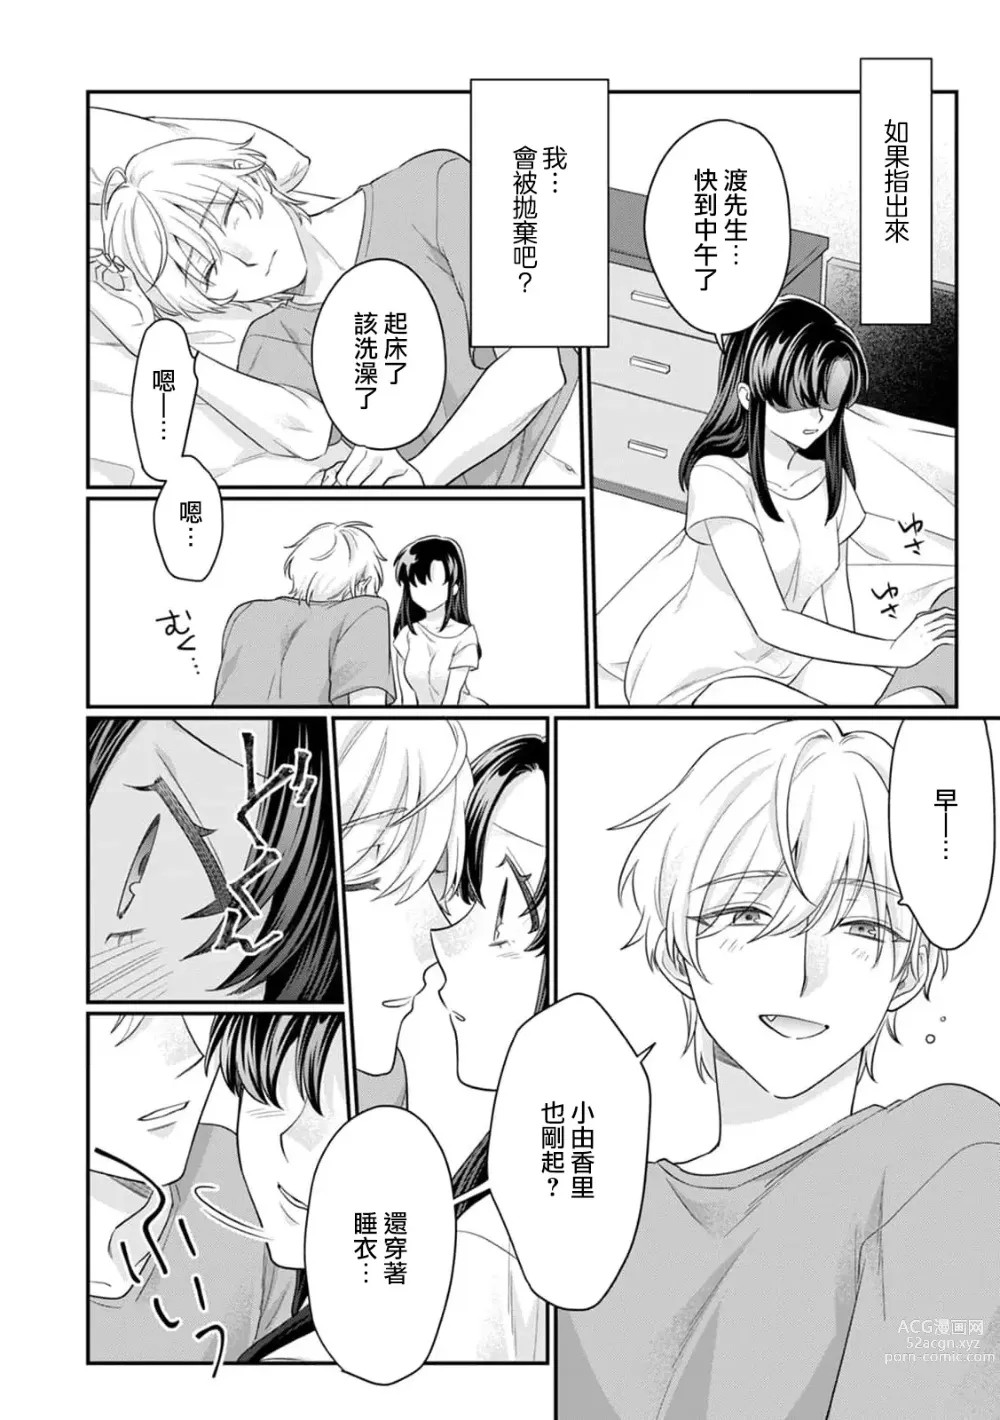 Page 3 of manga 用身体确认同居男友是否出轨…